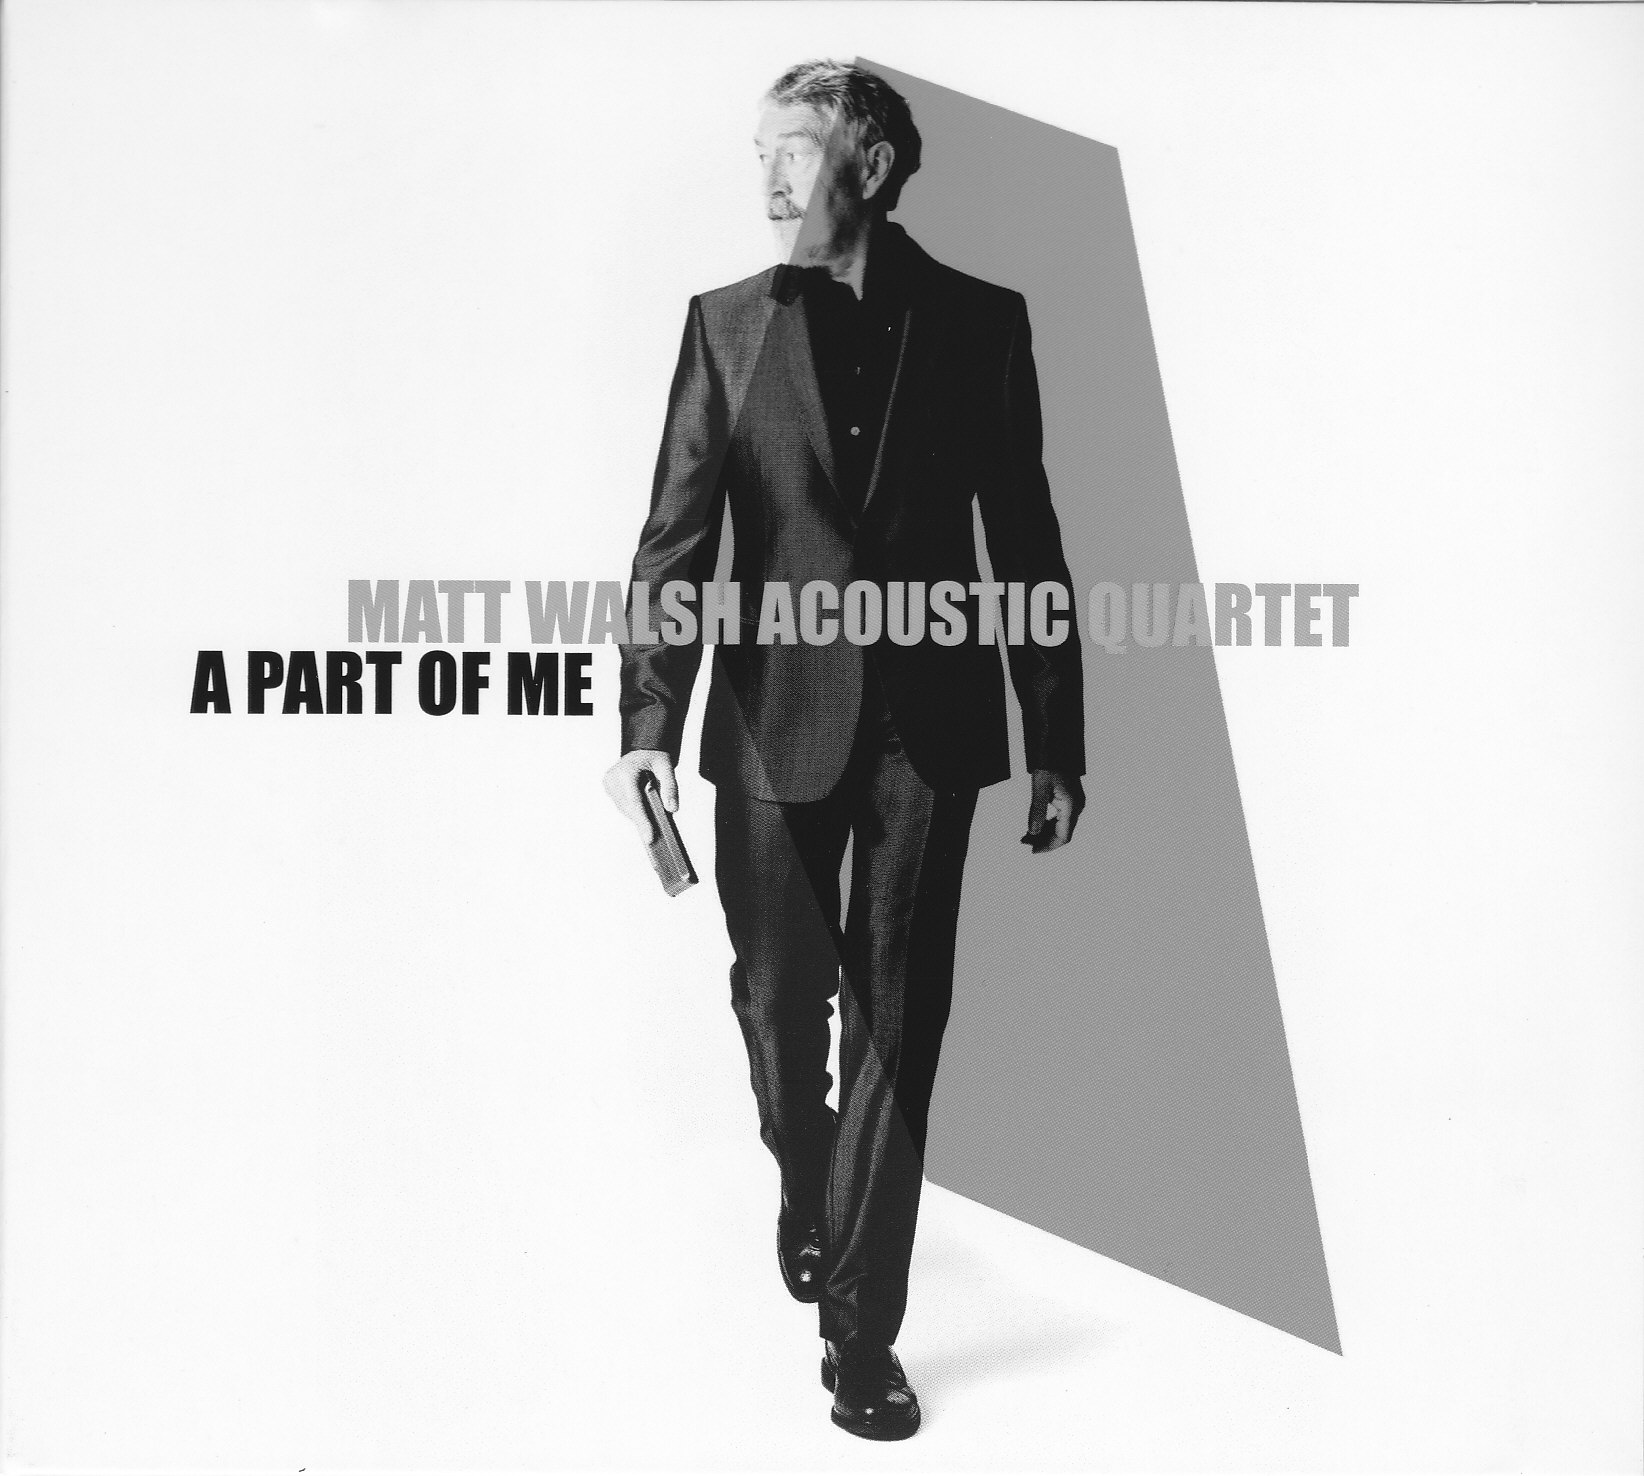 Matt Walsh Acoustic Quartet A Part of Me